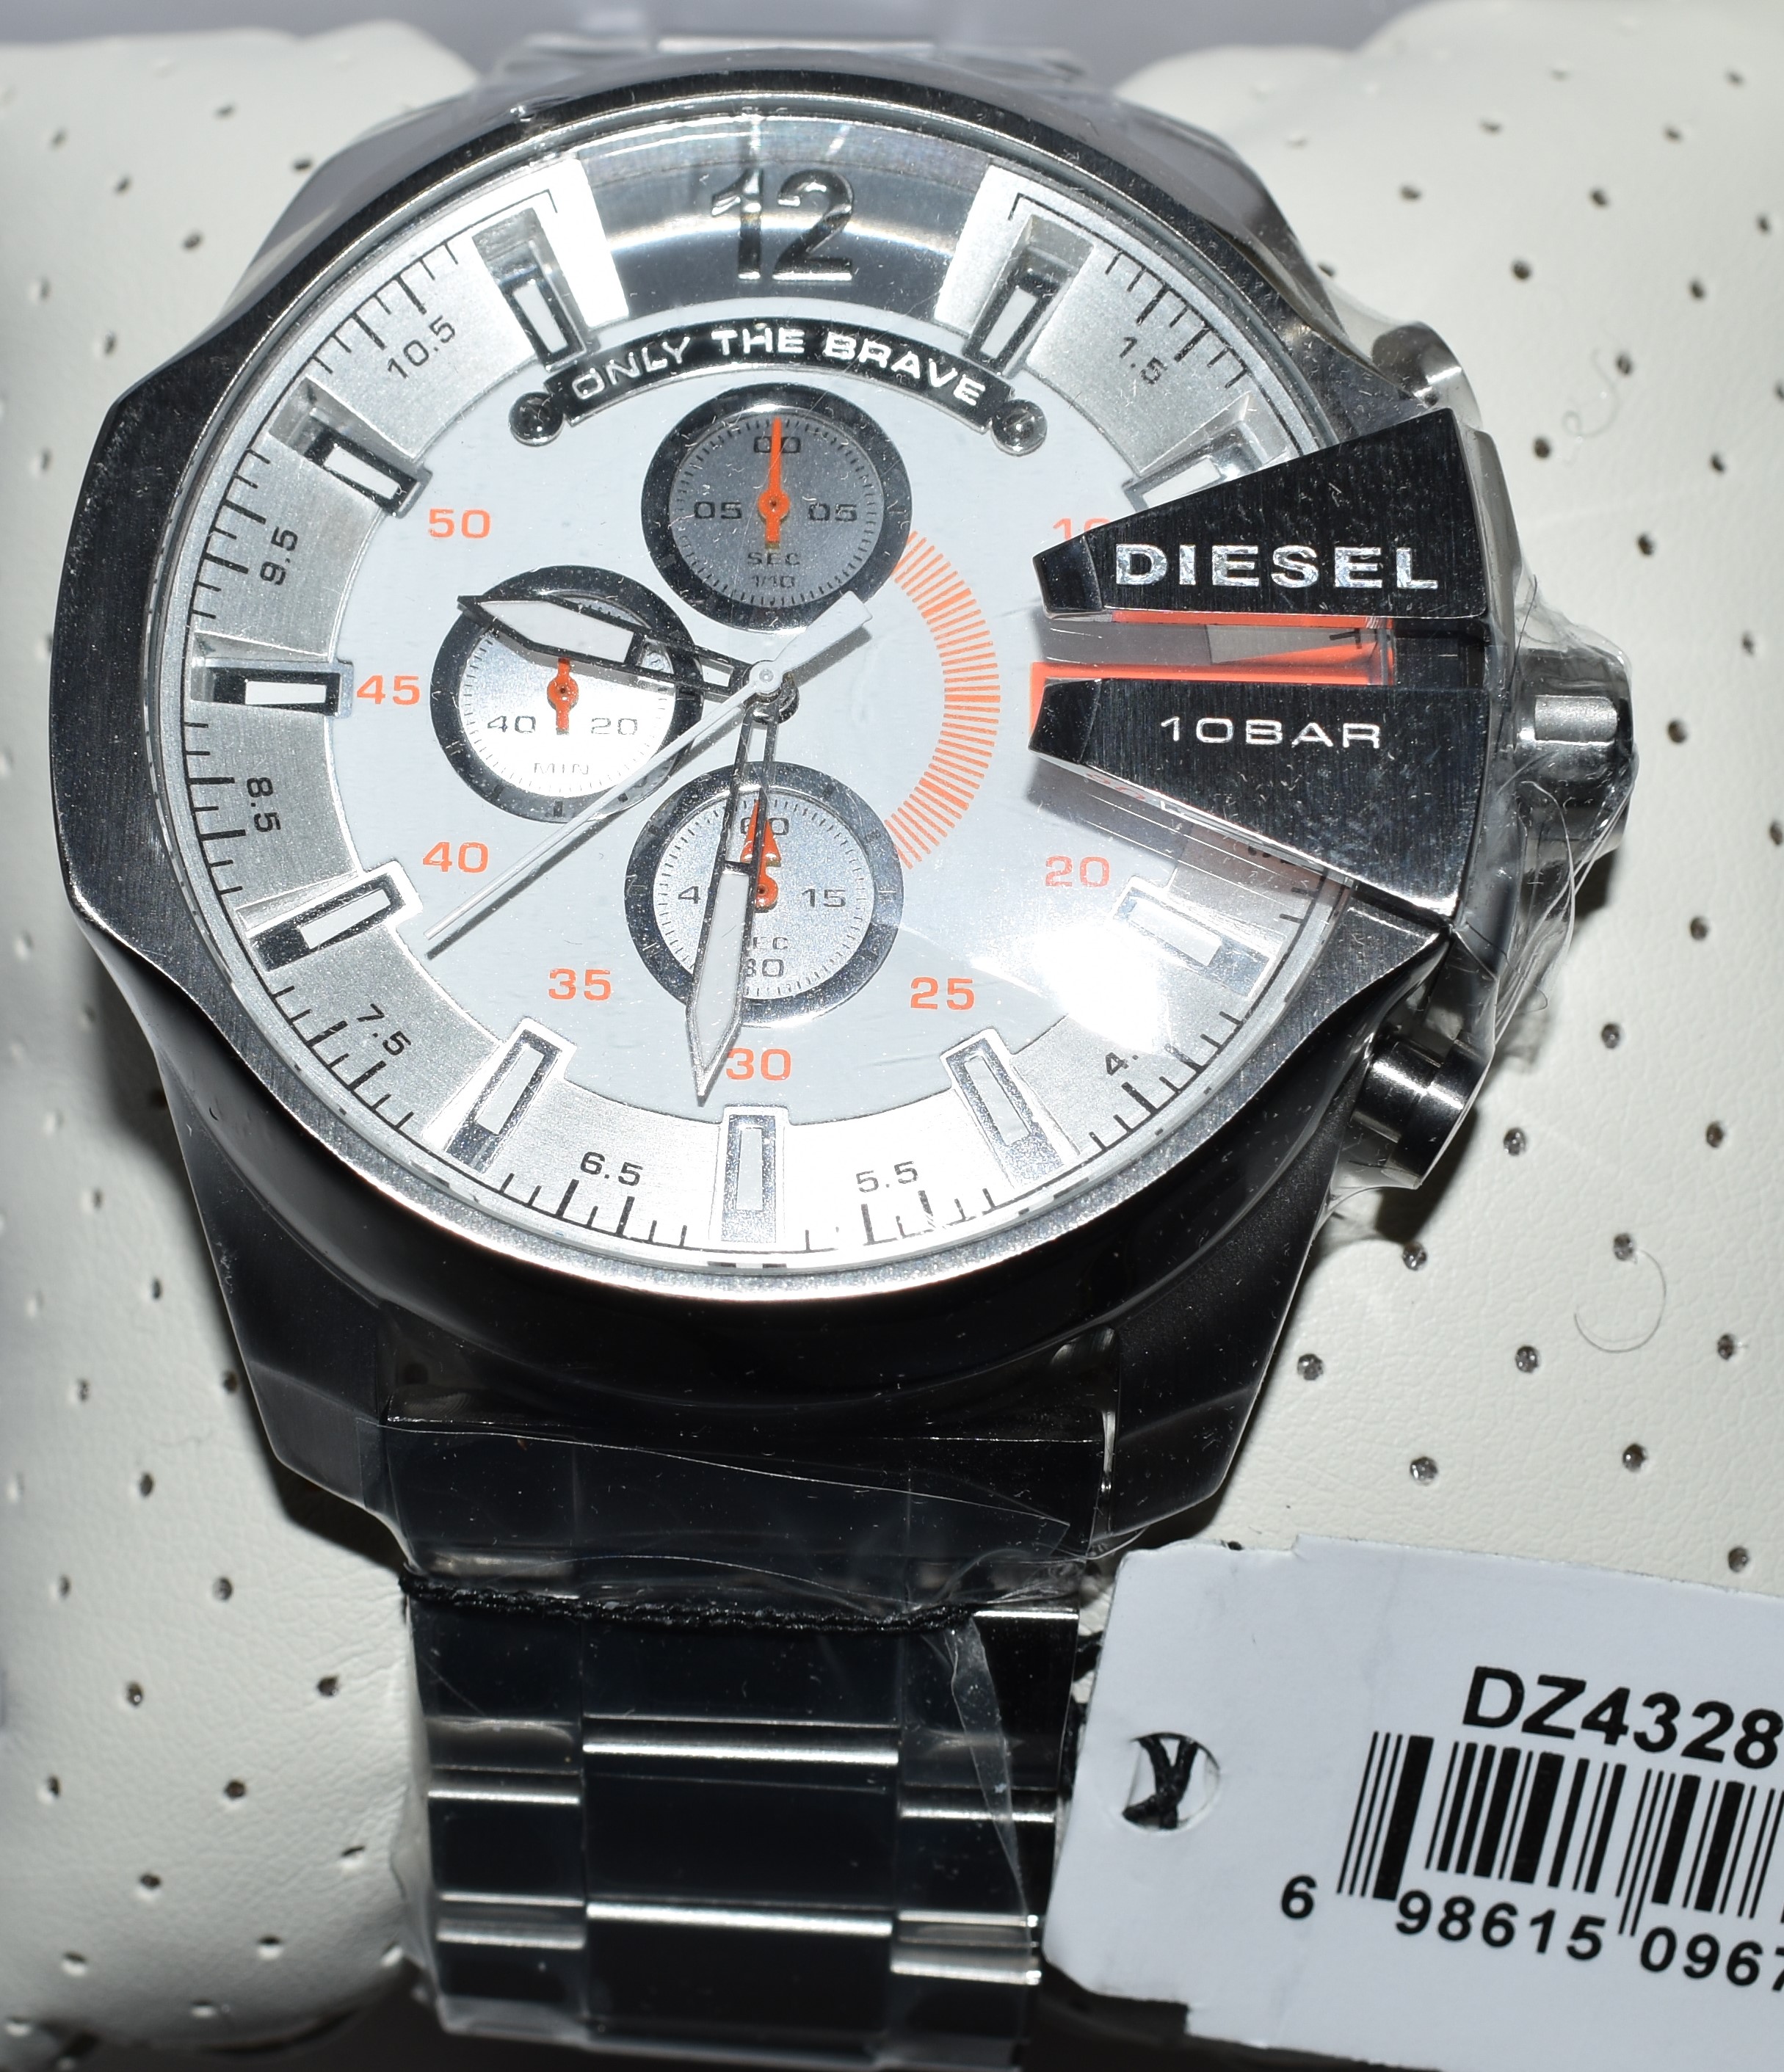 Diesel Men's Watch DZ4328 - Image 2 of 3